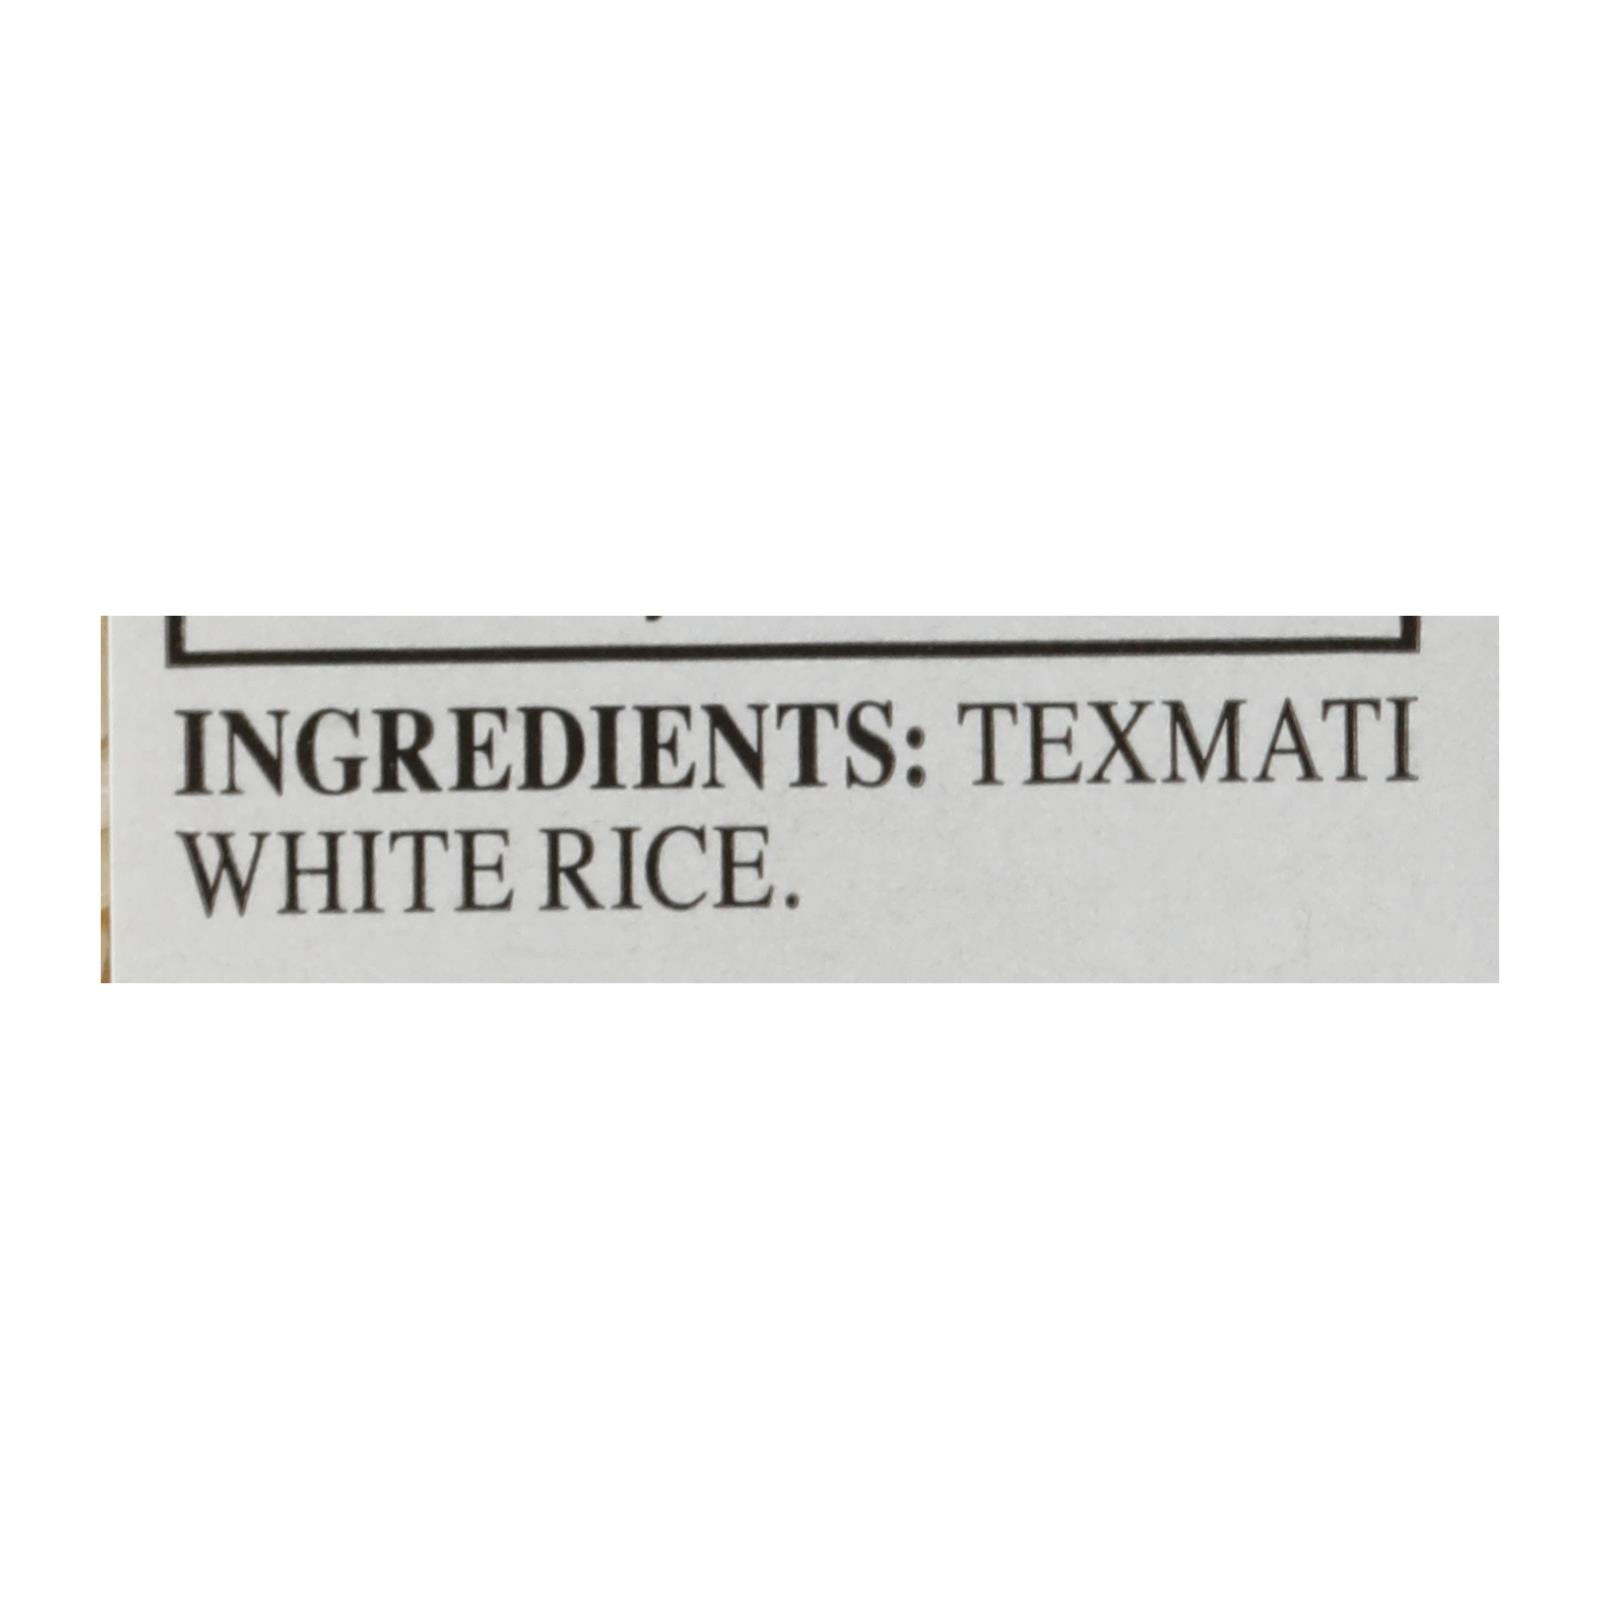 Rice Select Texmati Rice - White - Case Of 4 - 32 Oz.